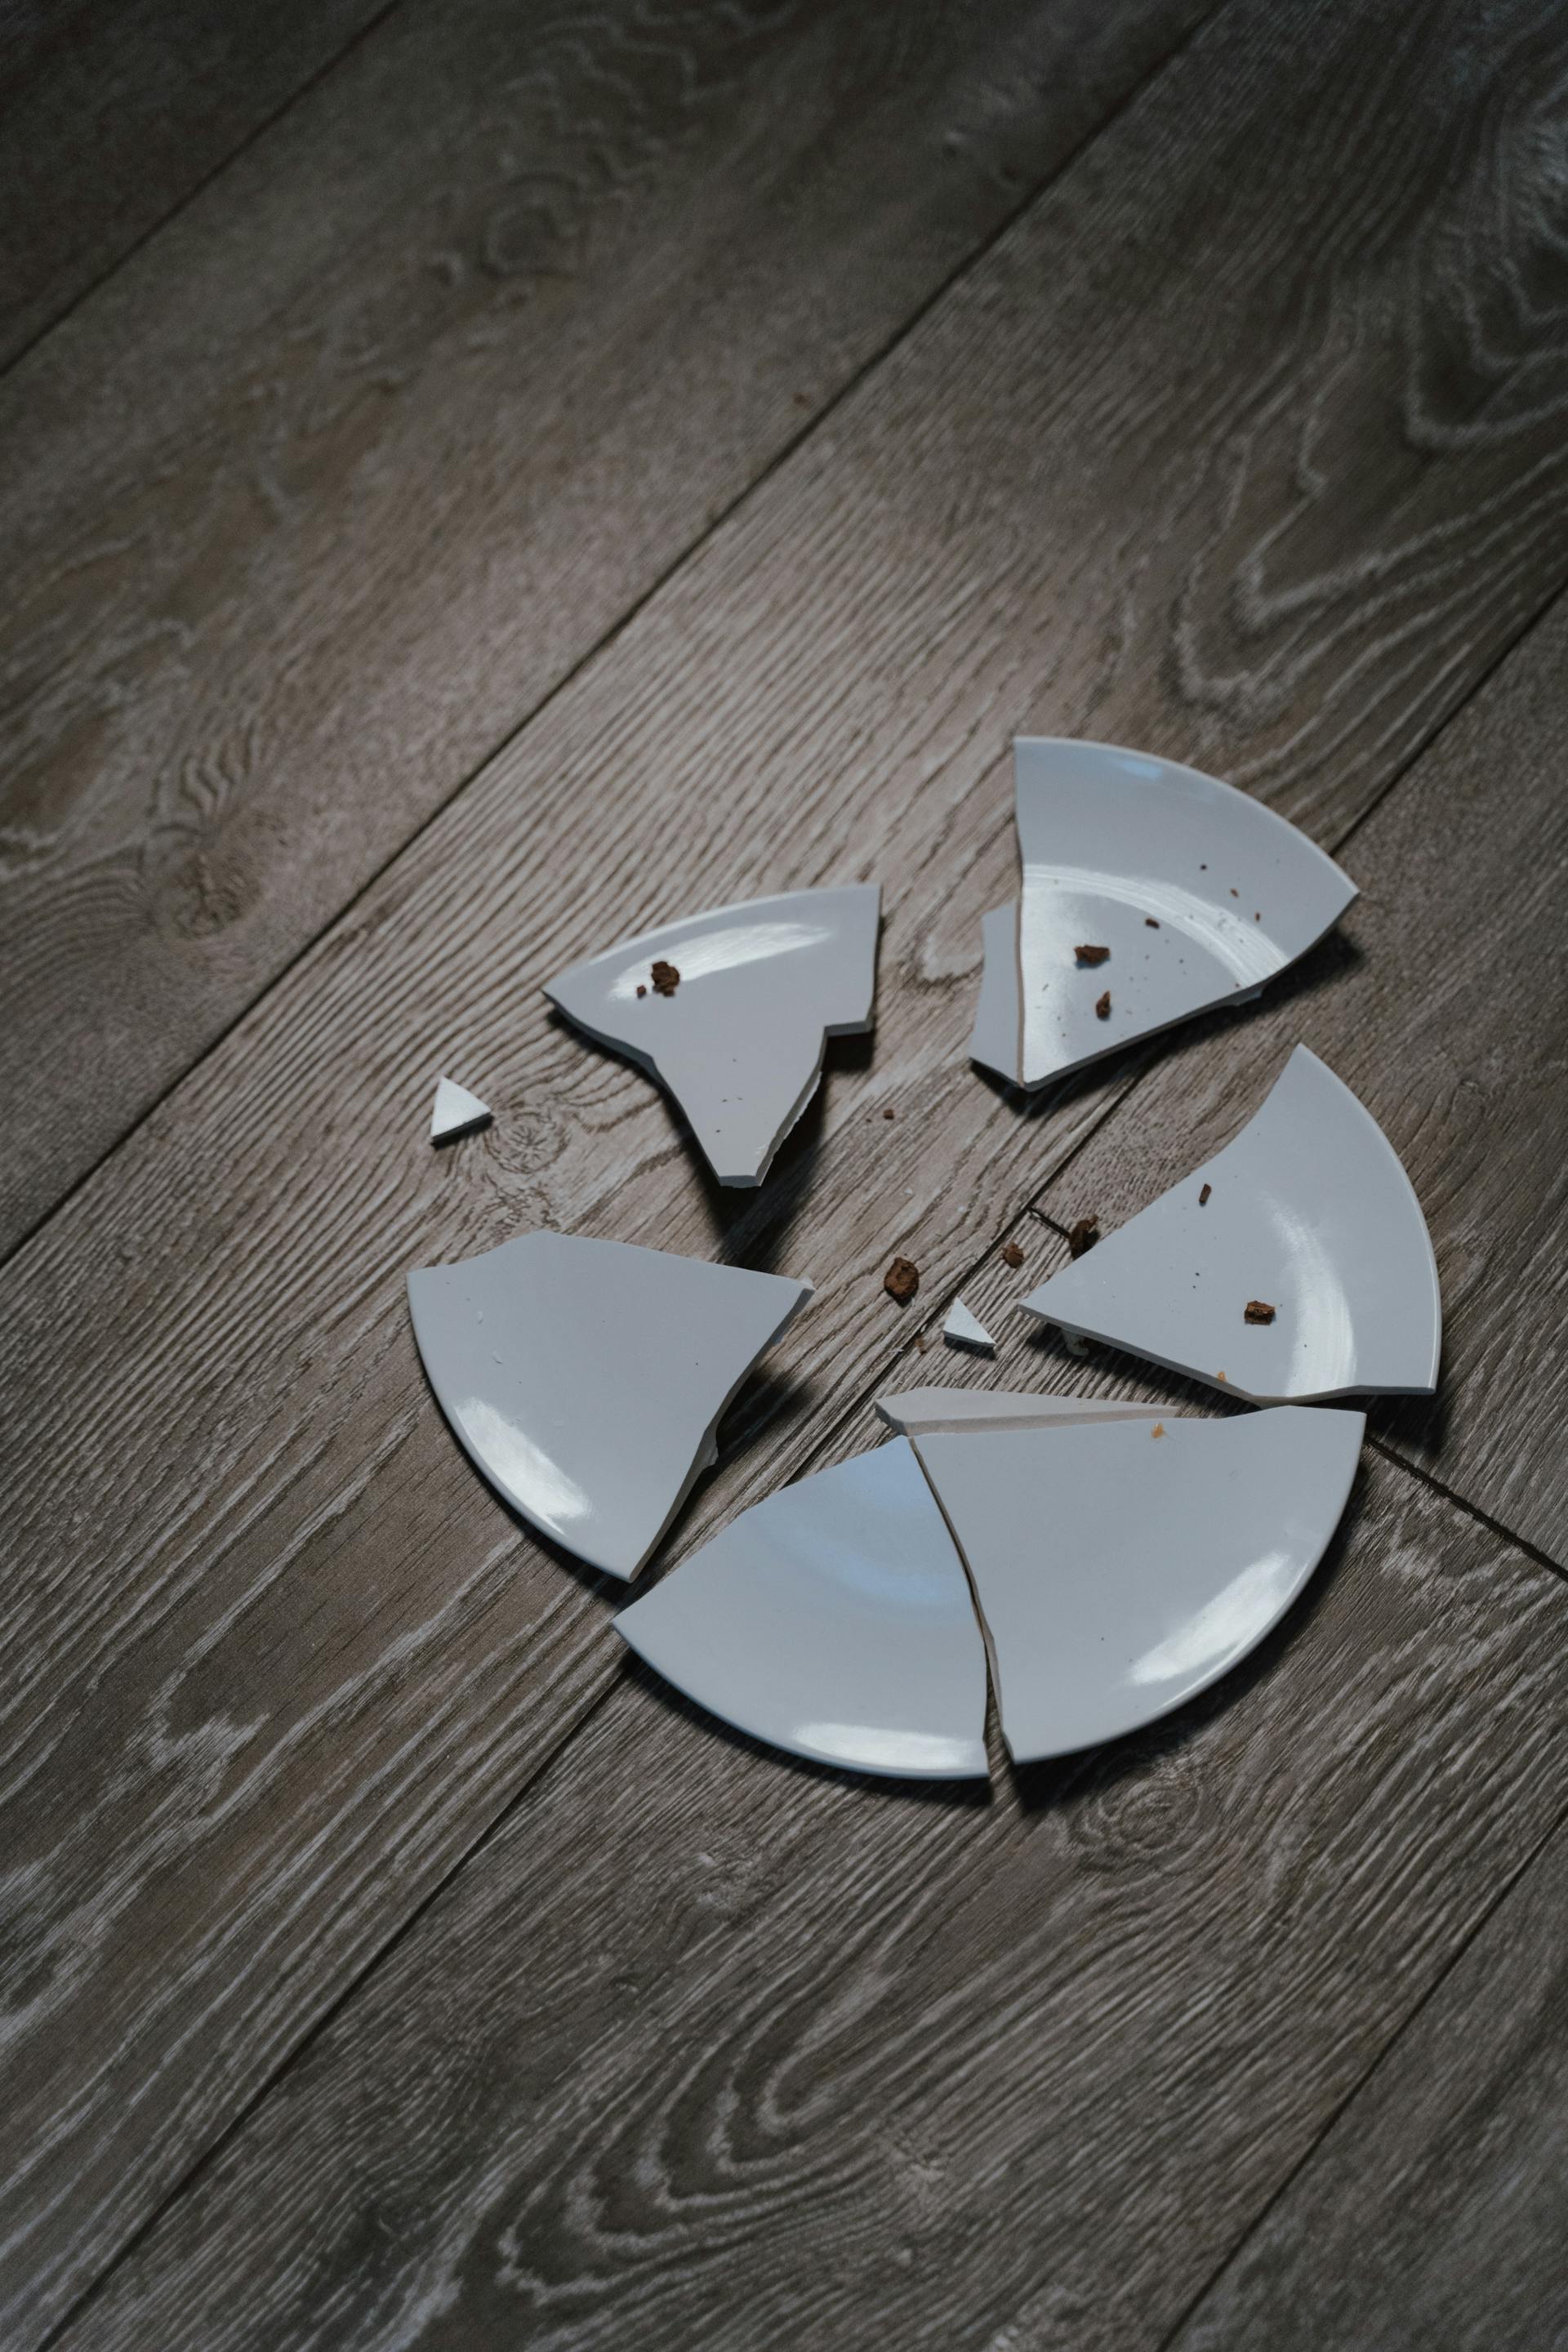 A broken plate | Source: Pexels